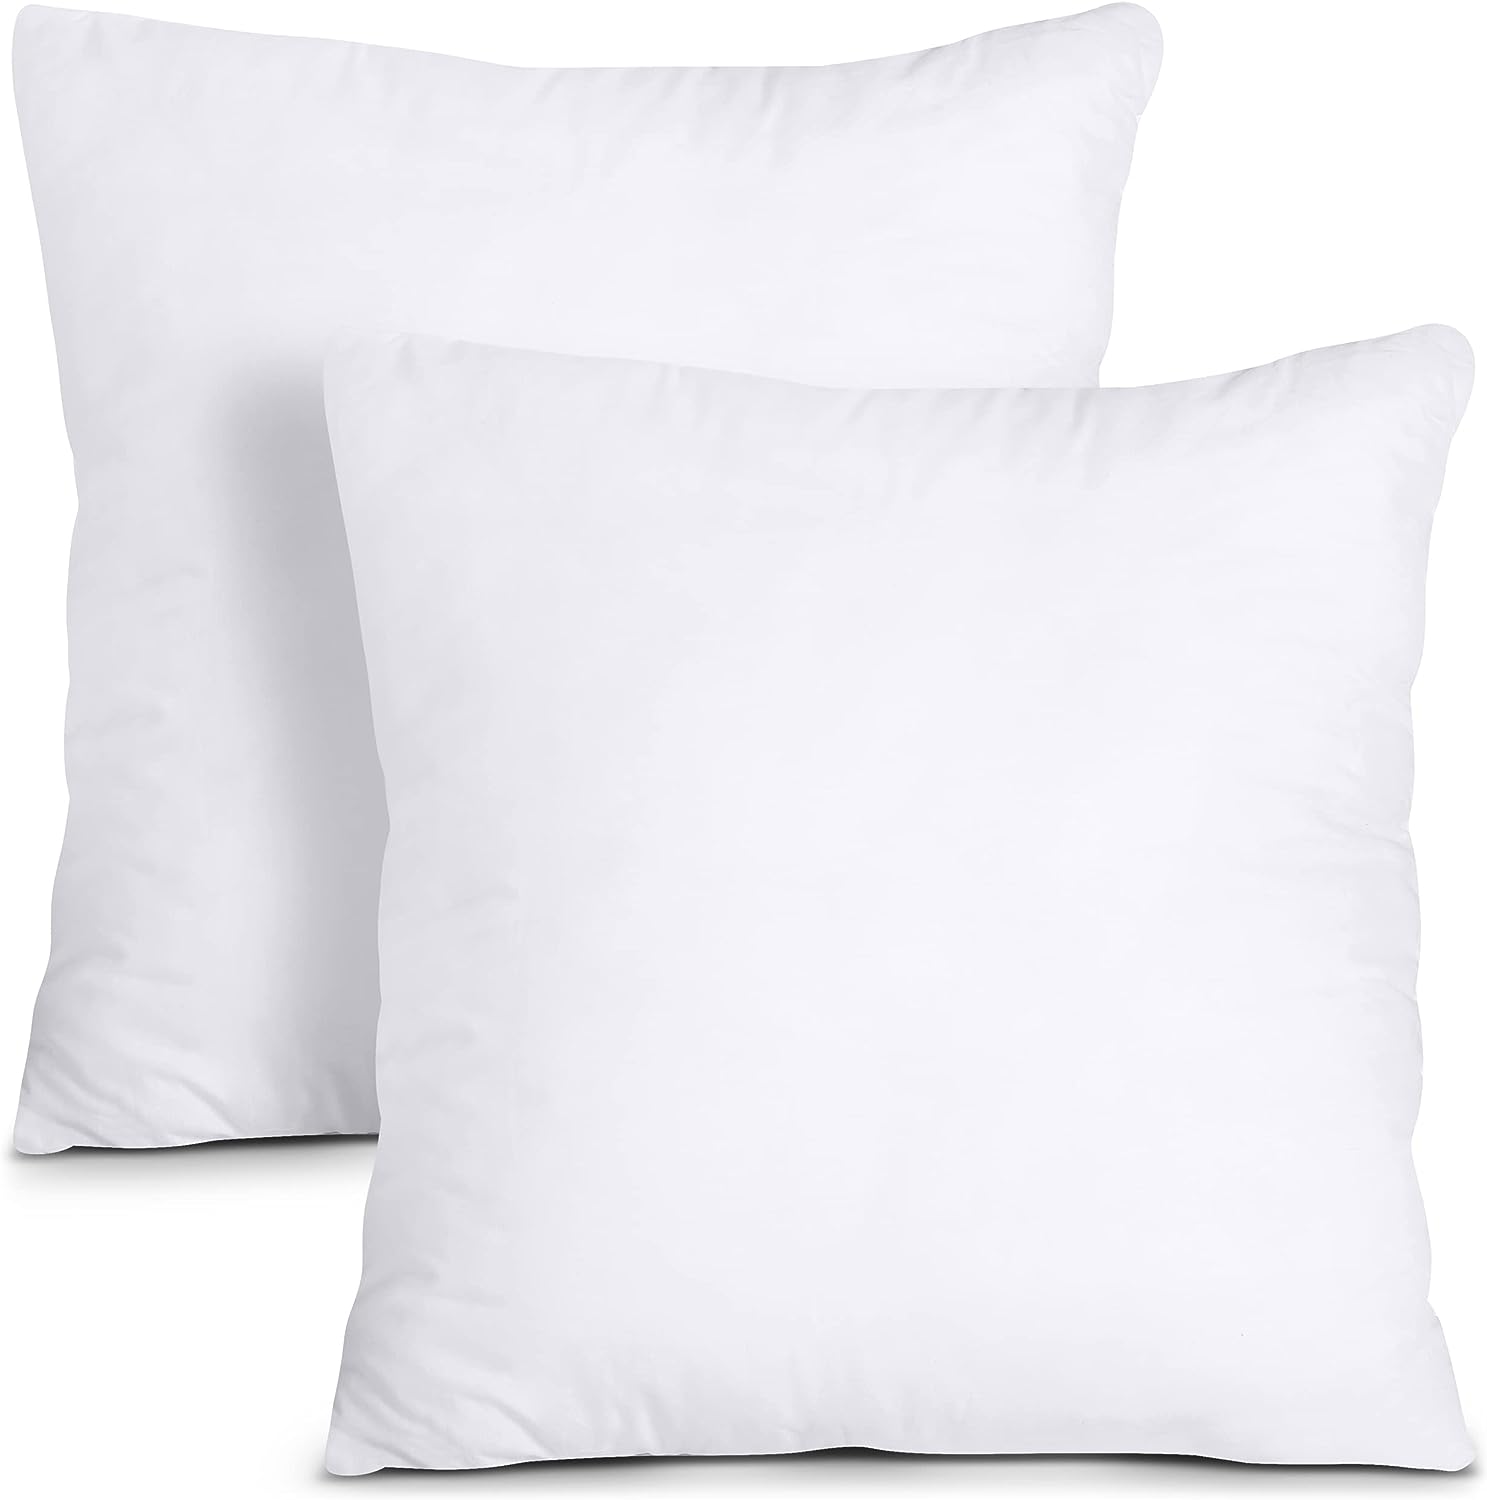 Utopia Bedding Throw Pillows Insert (Pack of 2, White)